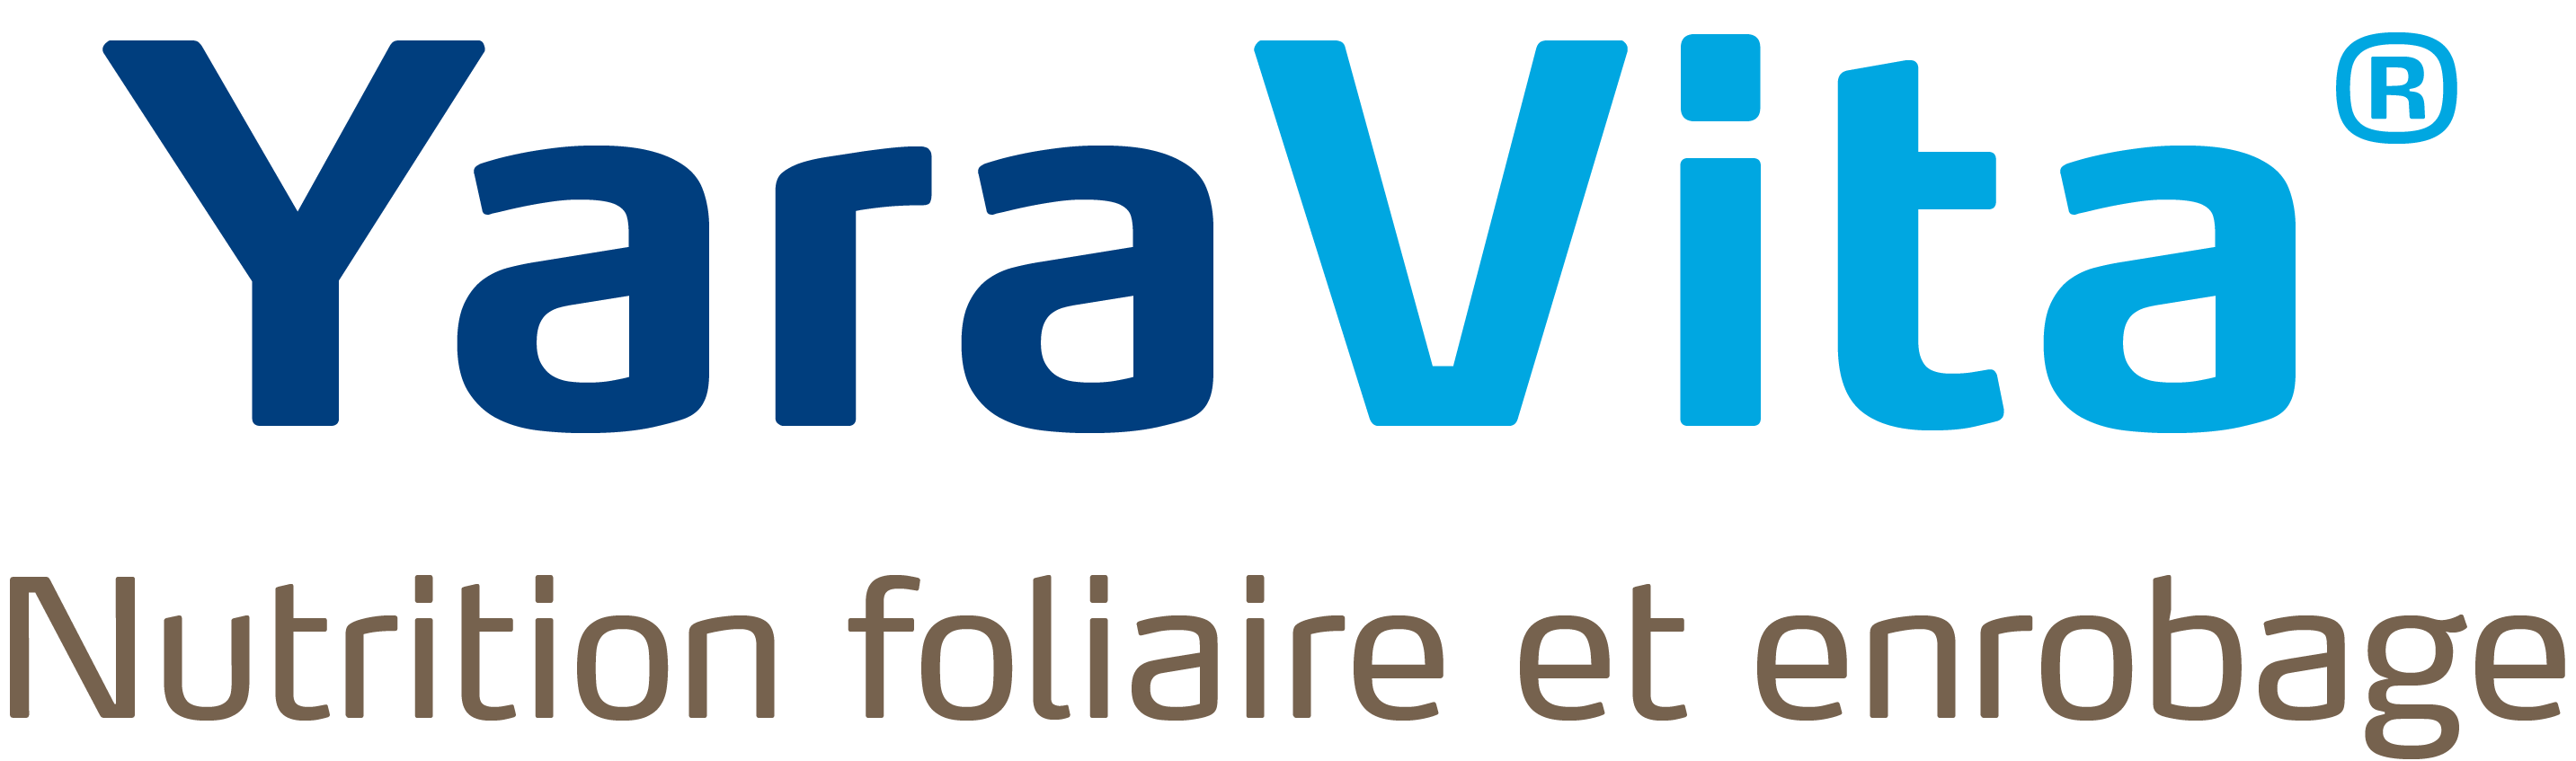 yaravita-tagline-french-2019-03-06.png